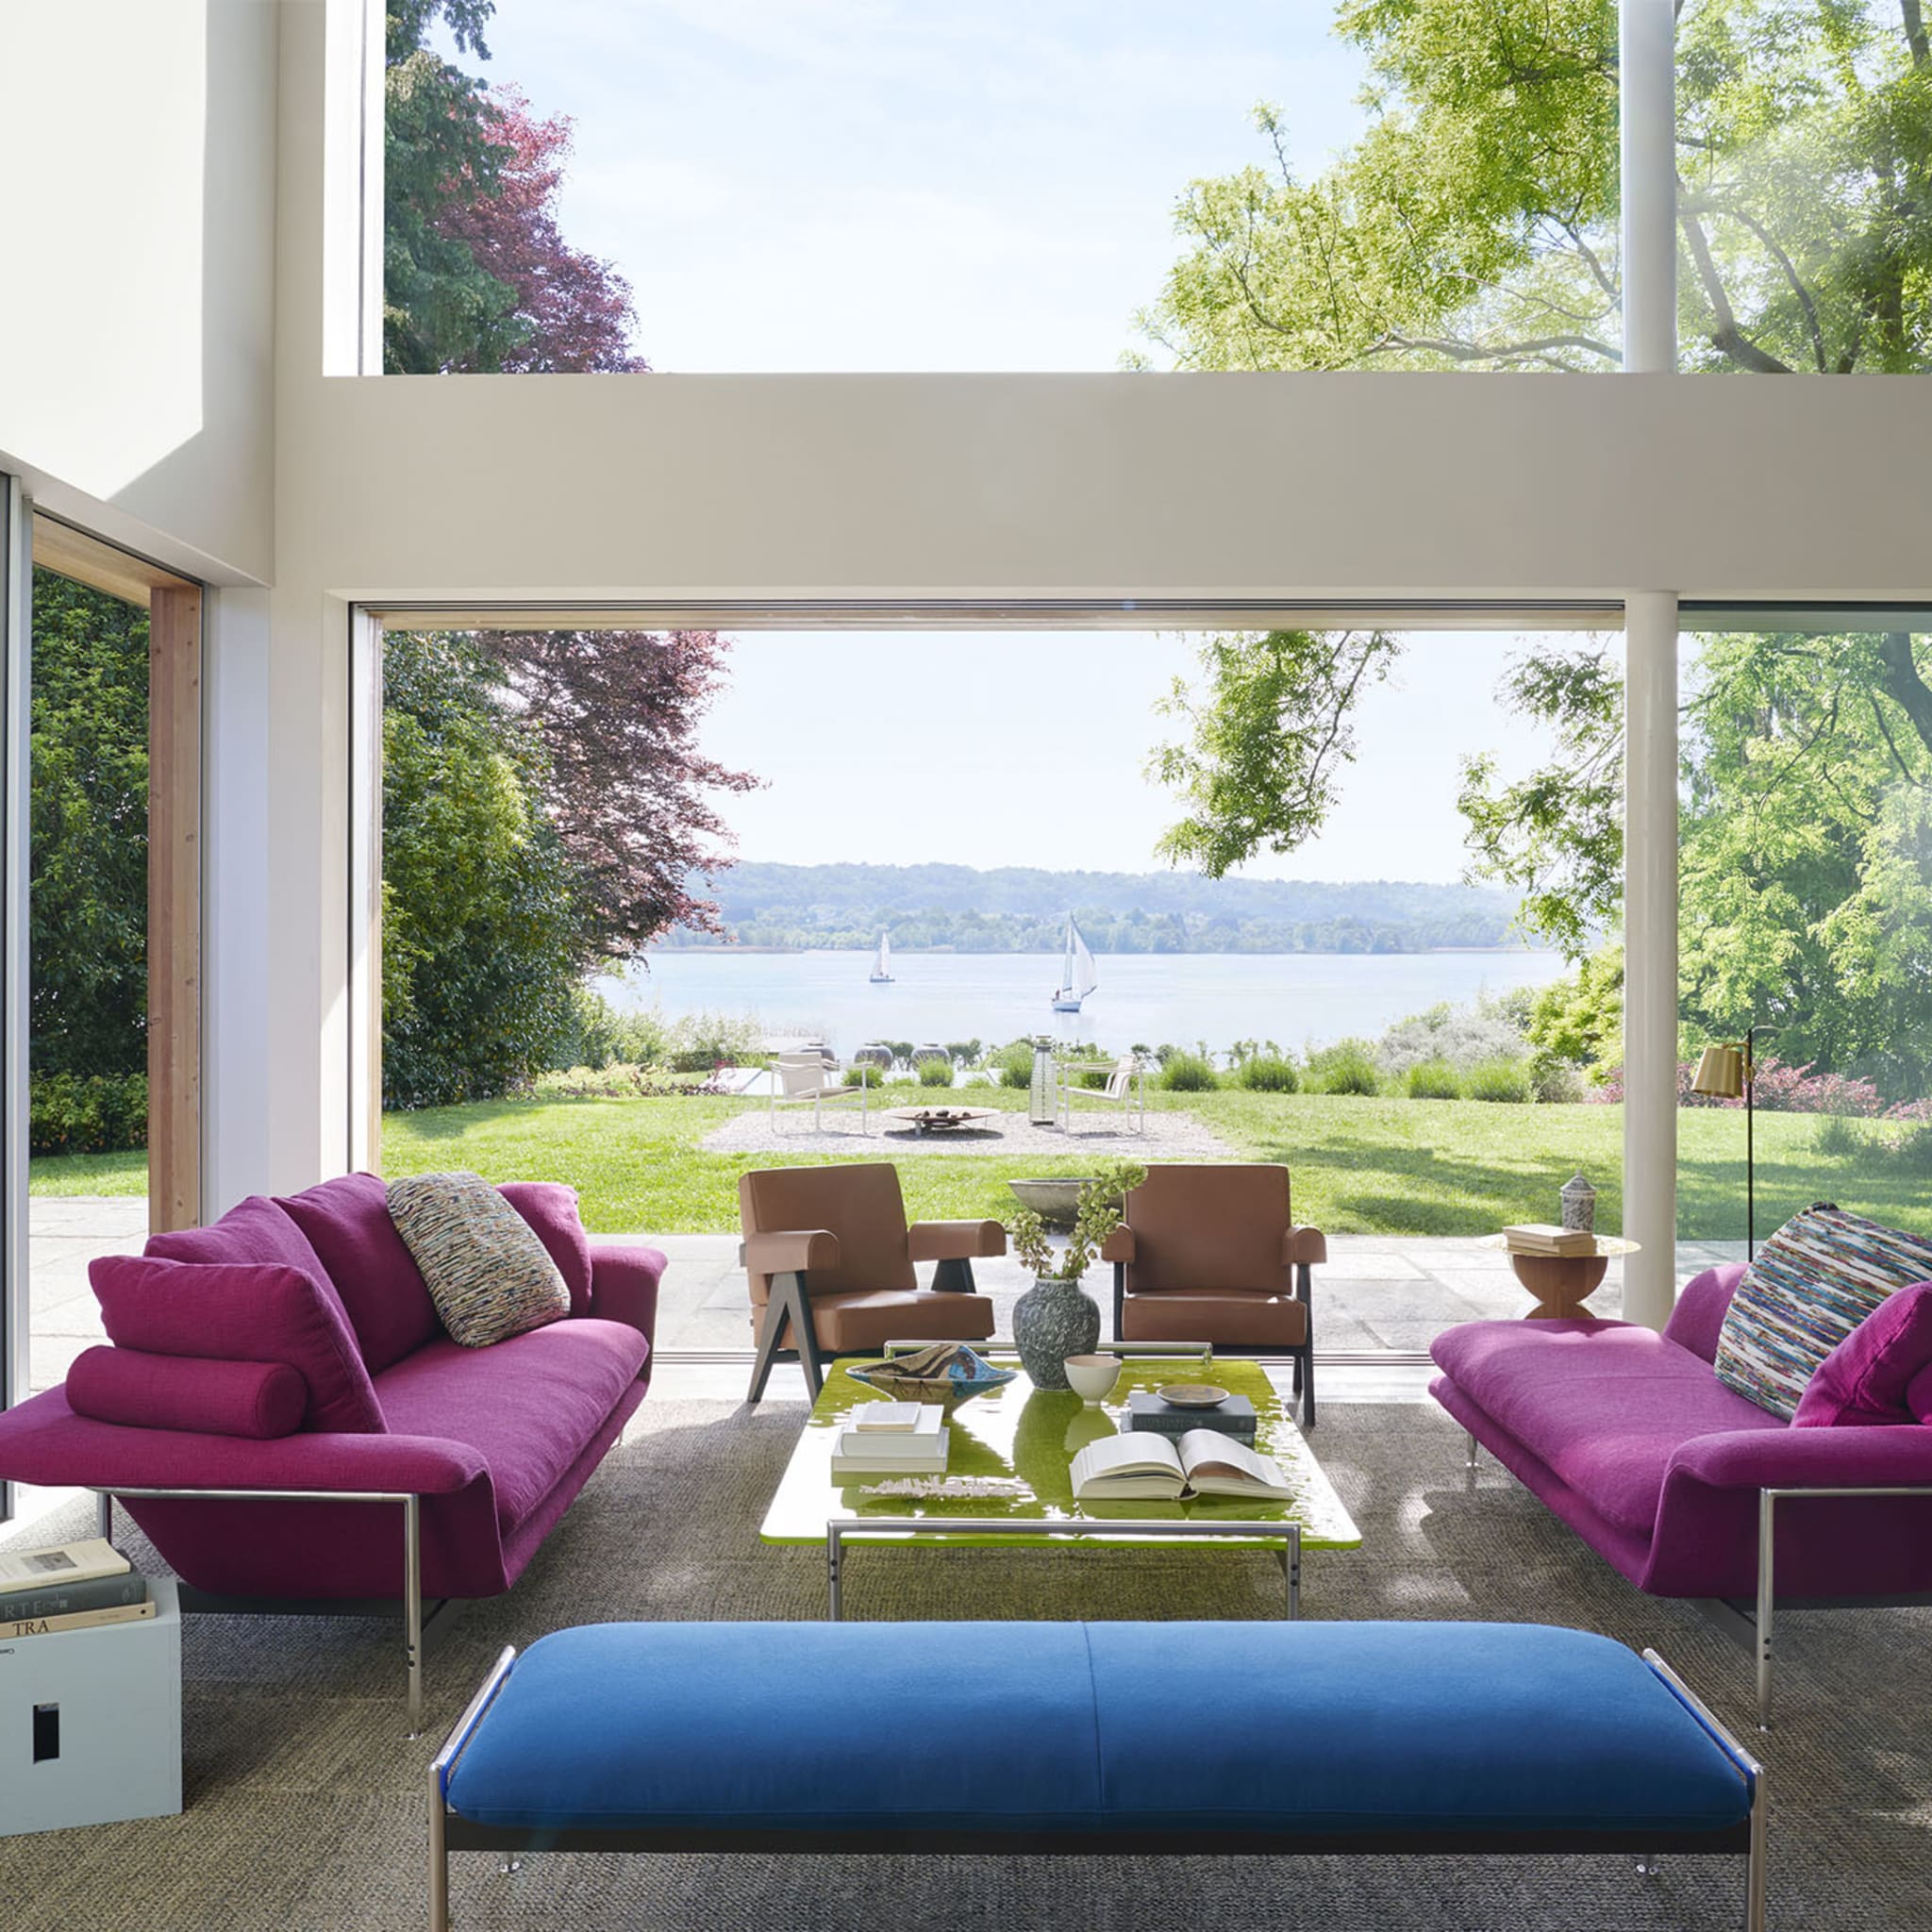 Esosoft 3-Seater Purple Sofa by Antonio Citterio - Alternative view 2